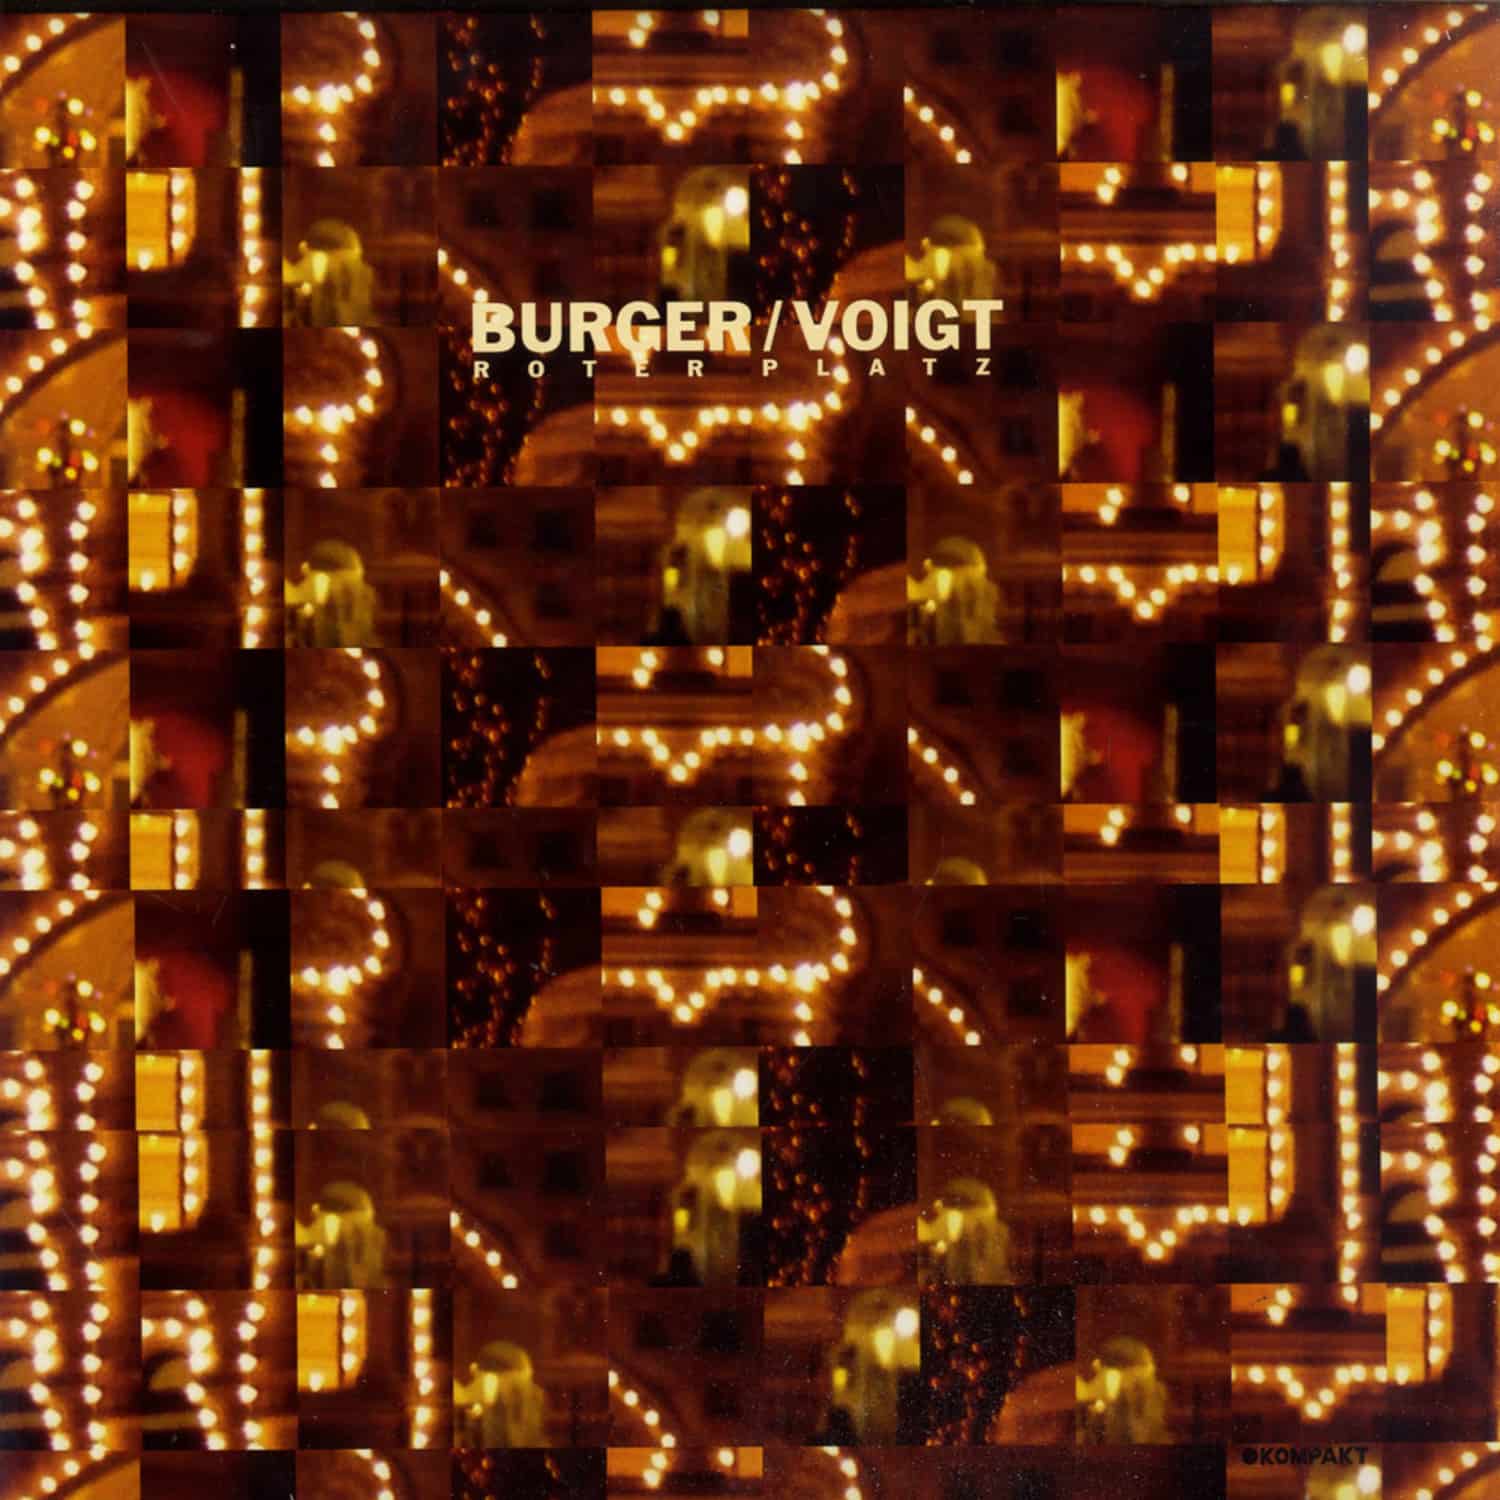 Burger / Voigt - ROTER PLATZ